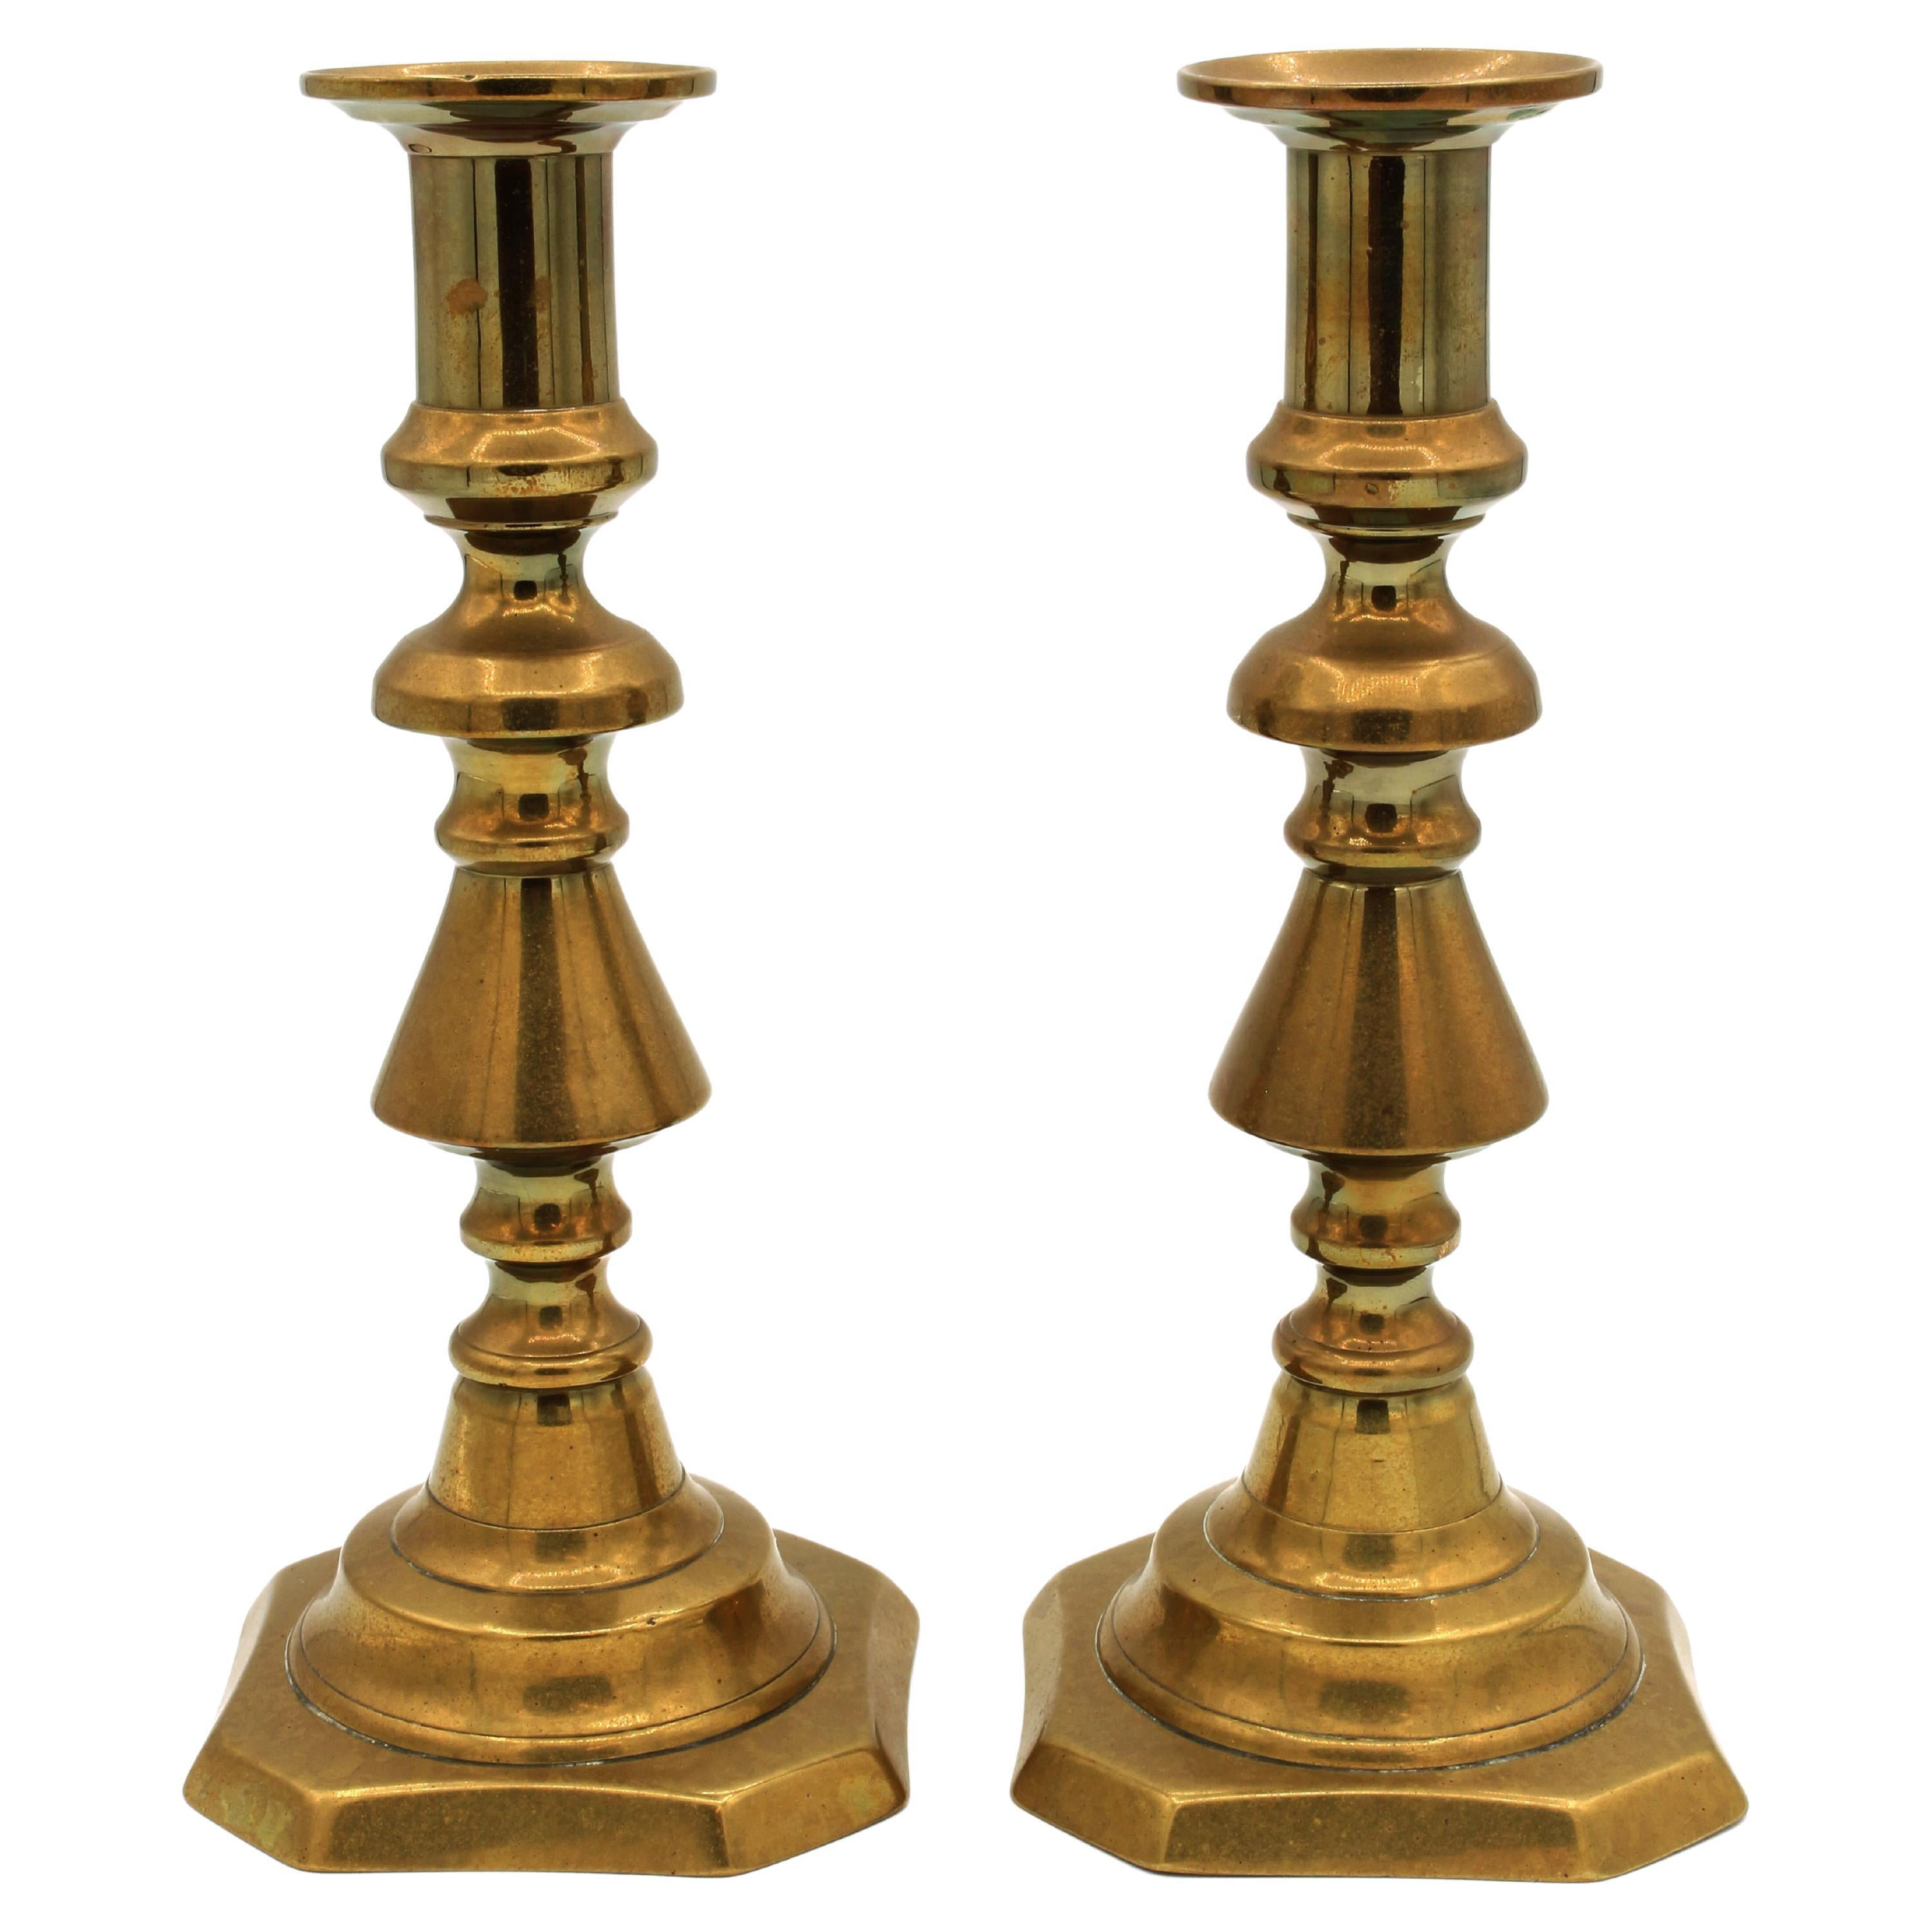 circa 1860-1880 Pair of English Brass Candlesticks